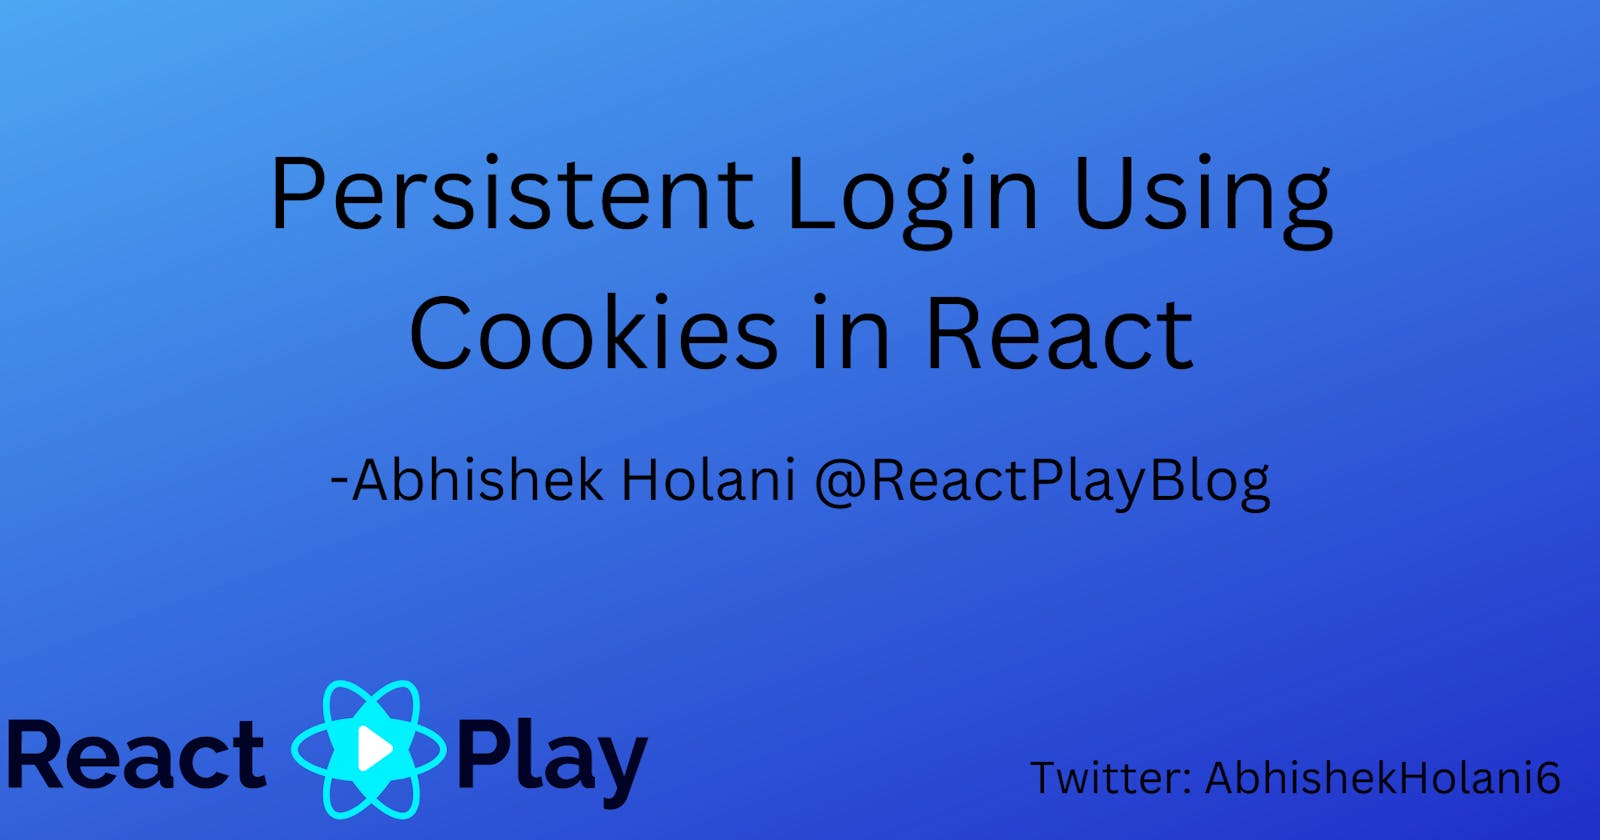 Persistent Log in using Cookies in React